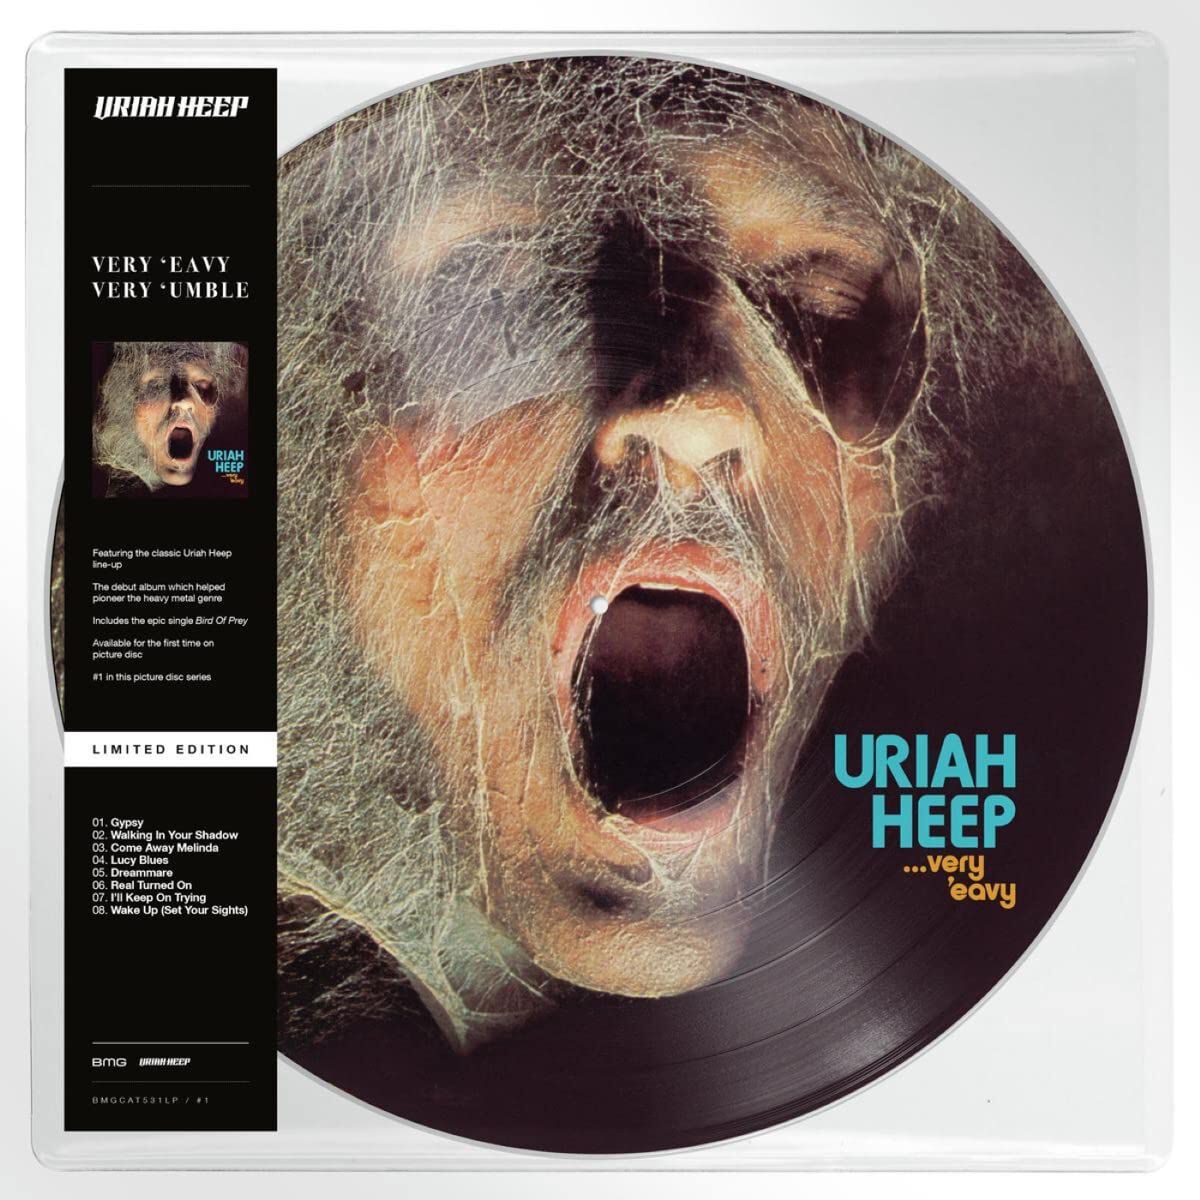 Uriah Heep Very 'eavy very 'umble' LP coloured